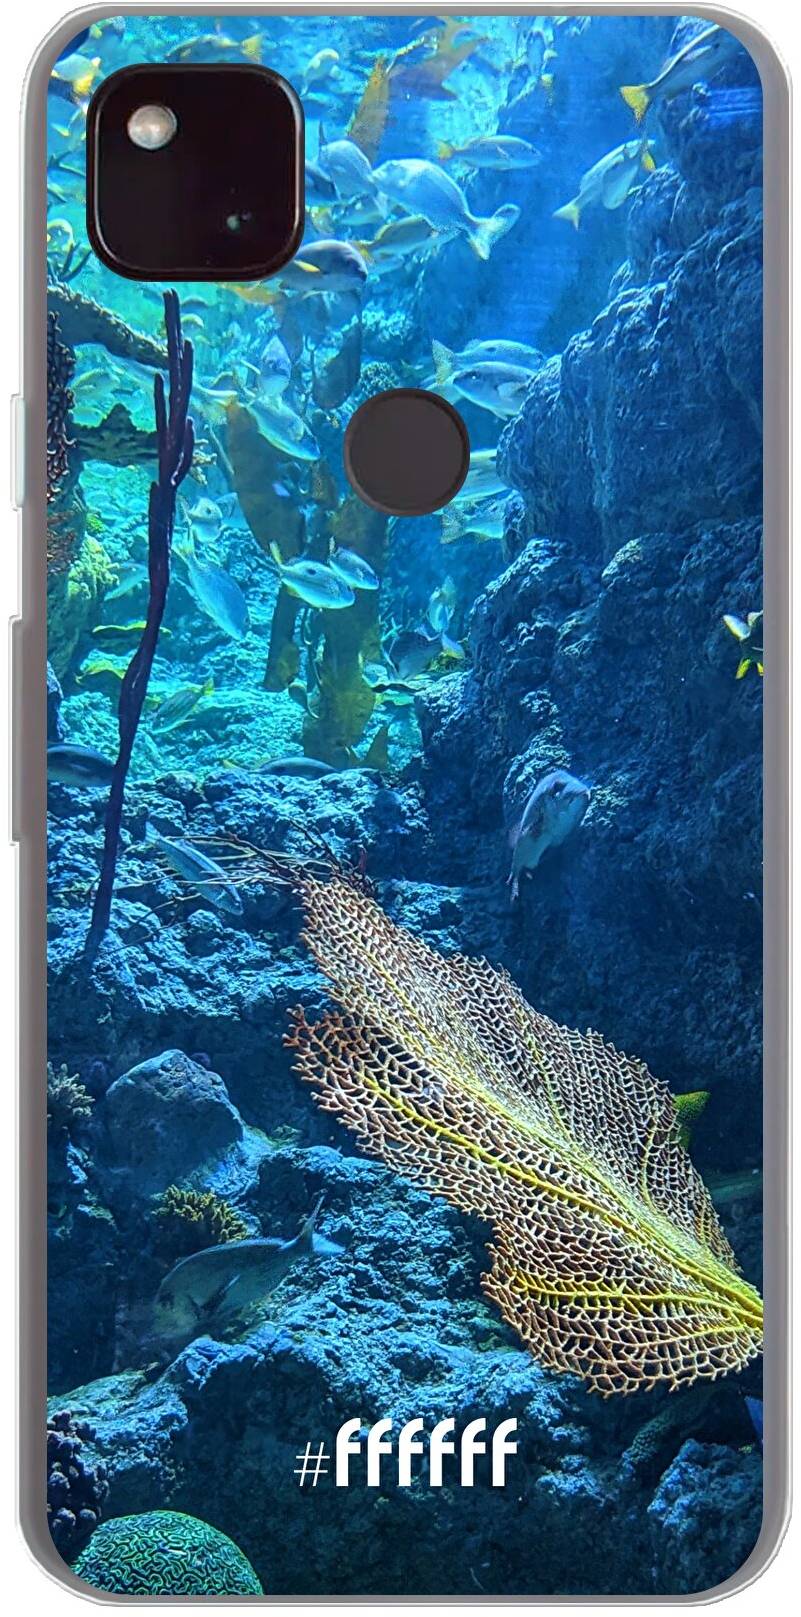 Coral Reef Pixel 4a 5G